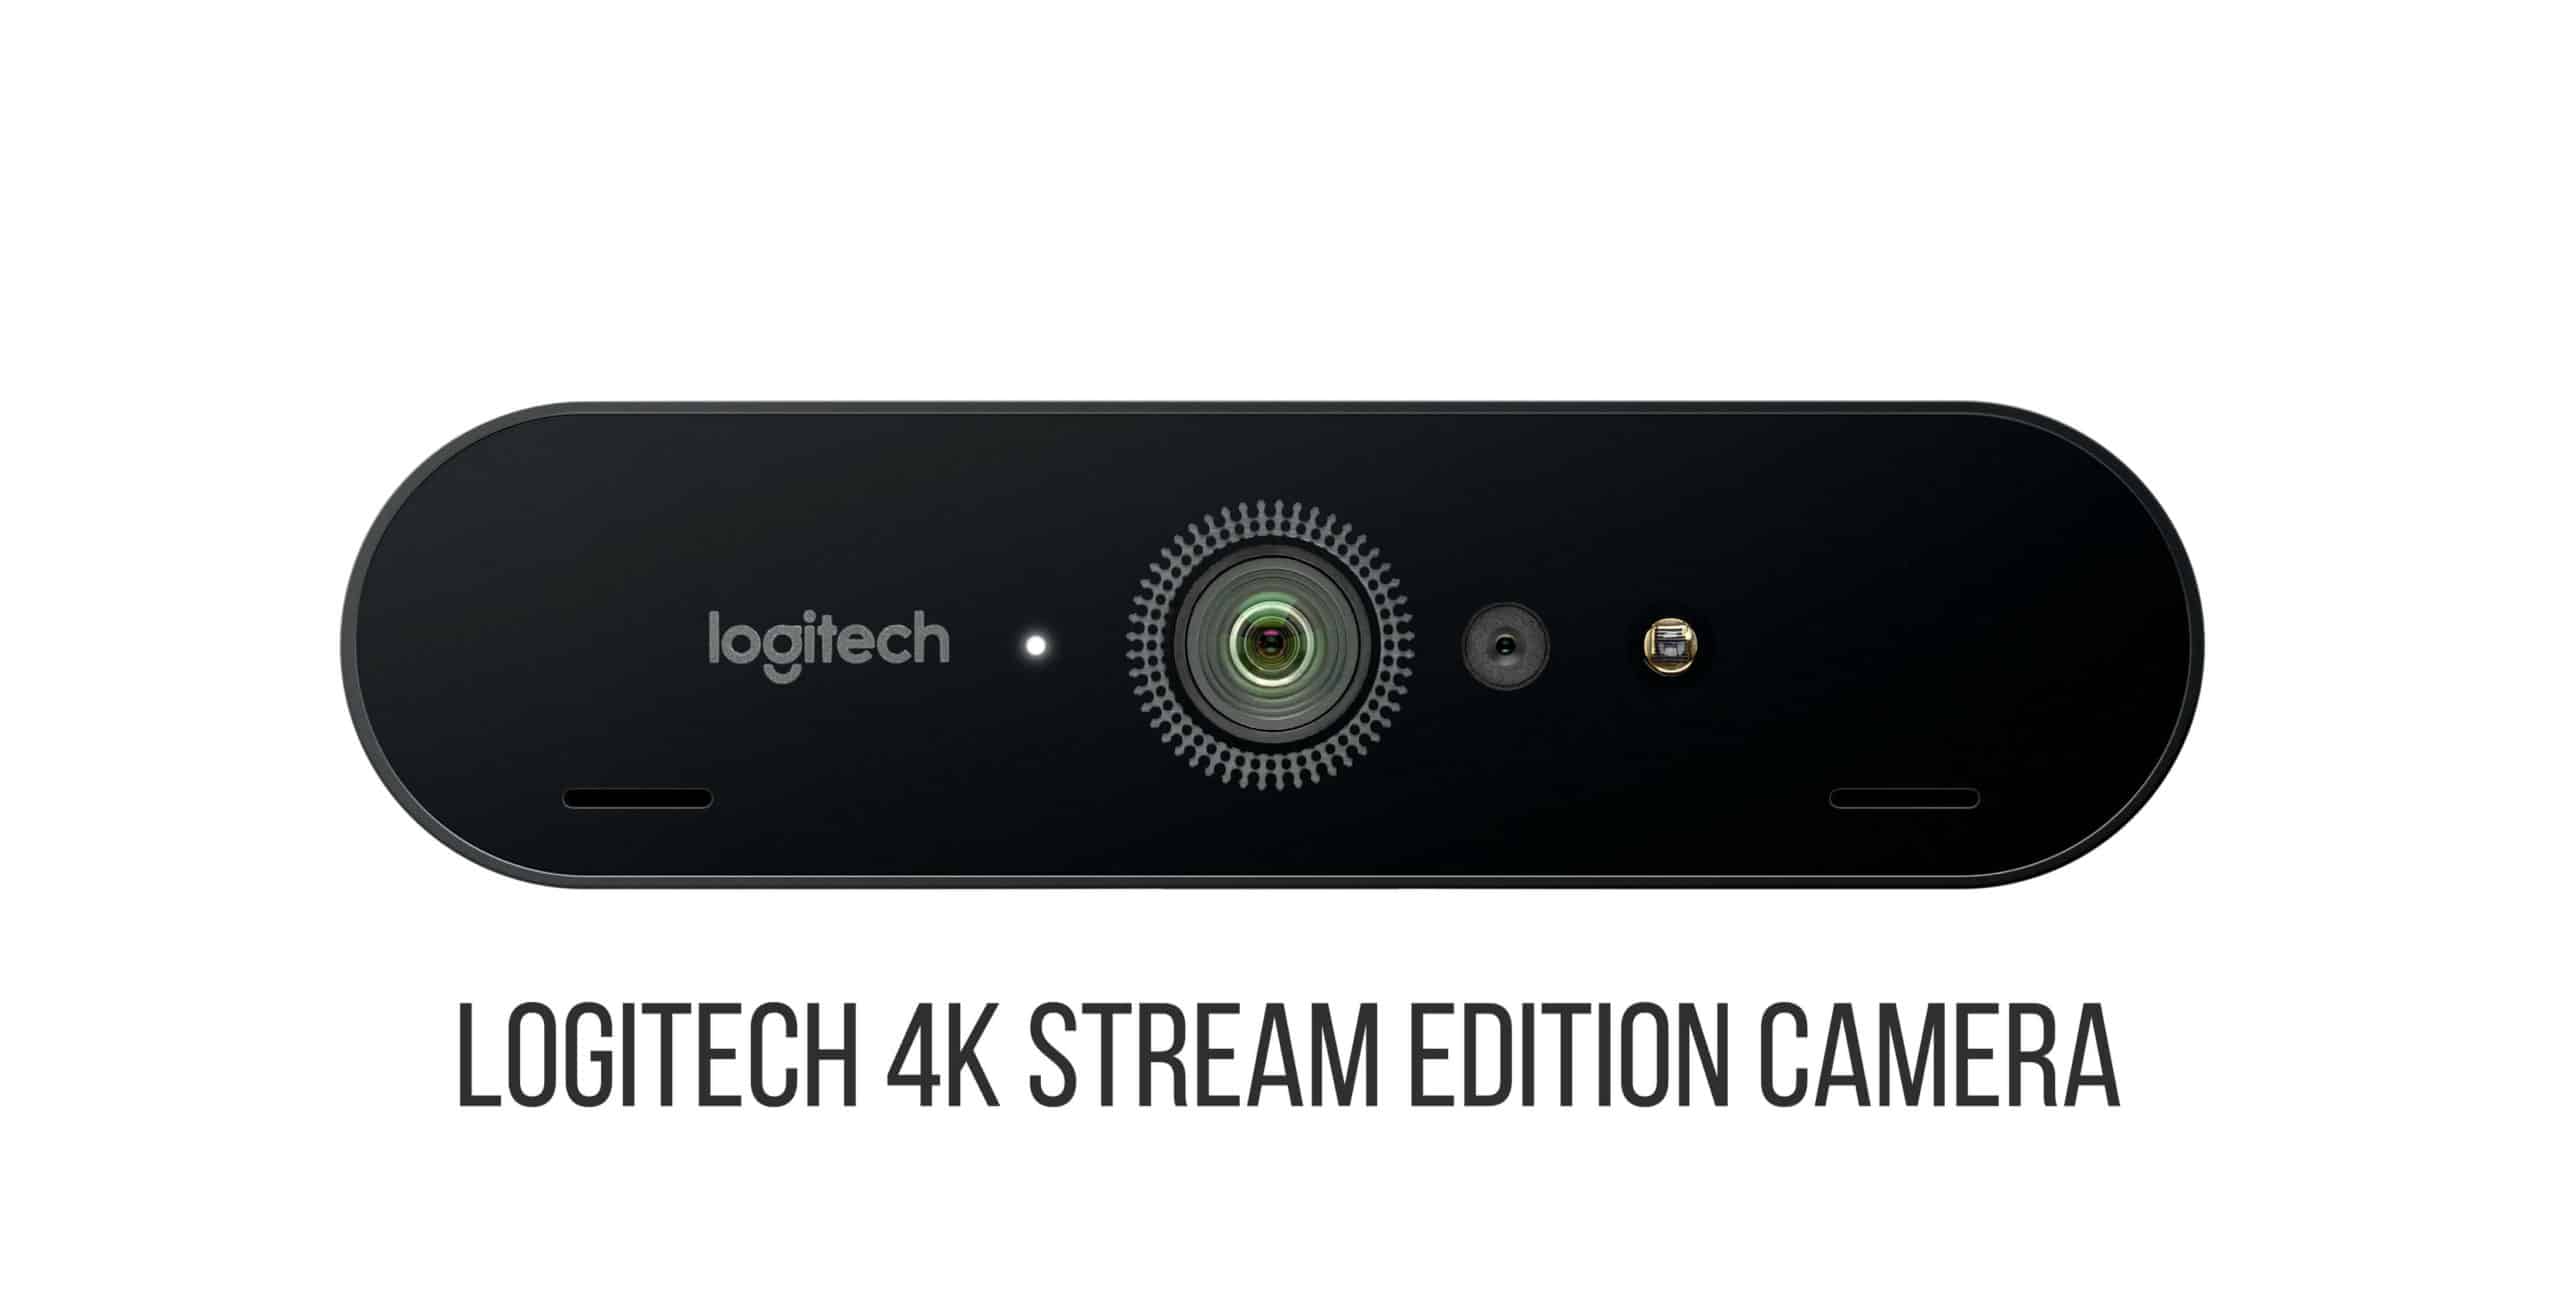 Logitech Introduces the Logitech BRIO 4K STREAM EDITION Camera